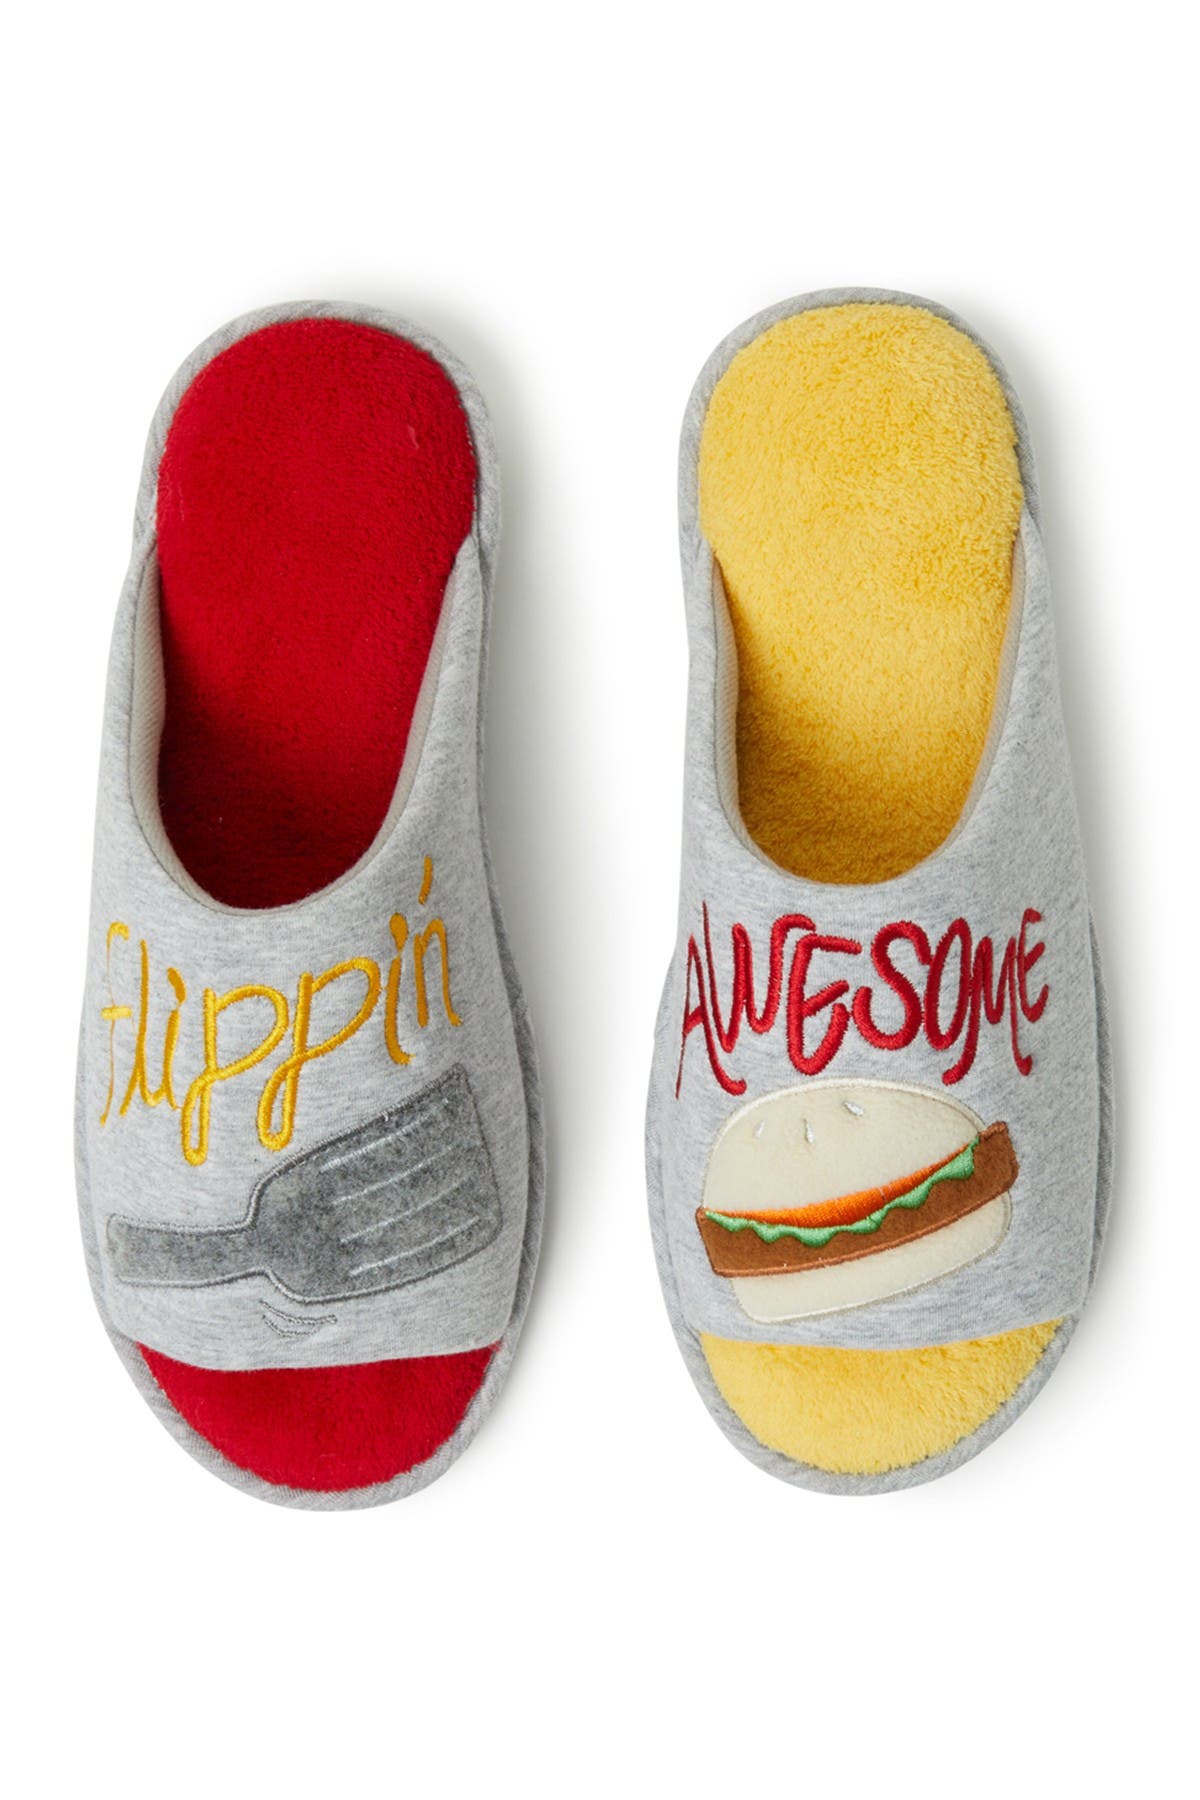 comfiest slippers